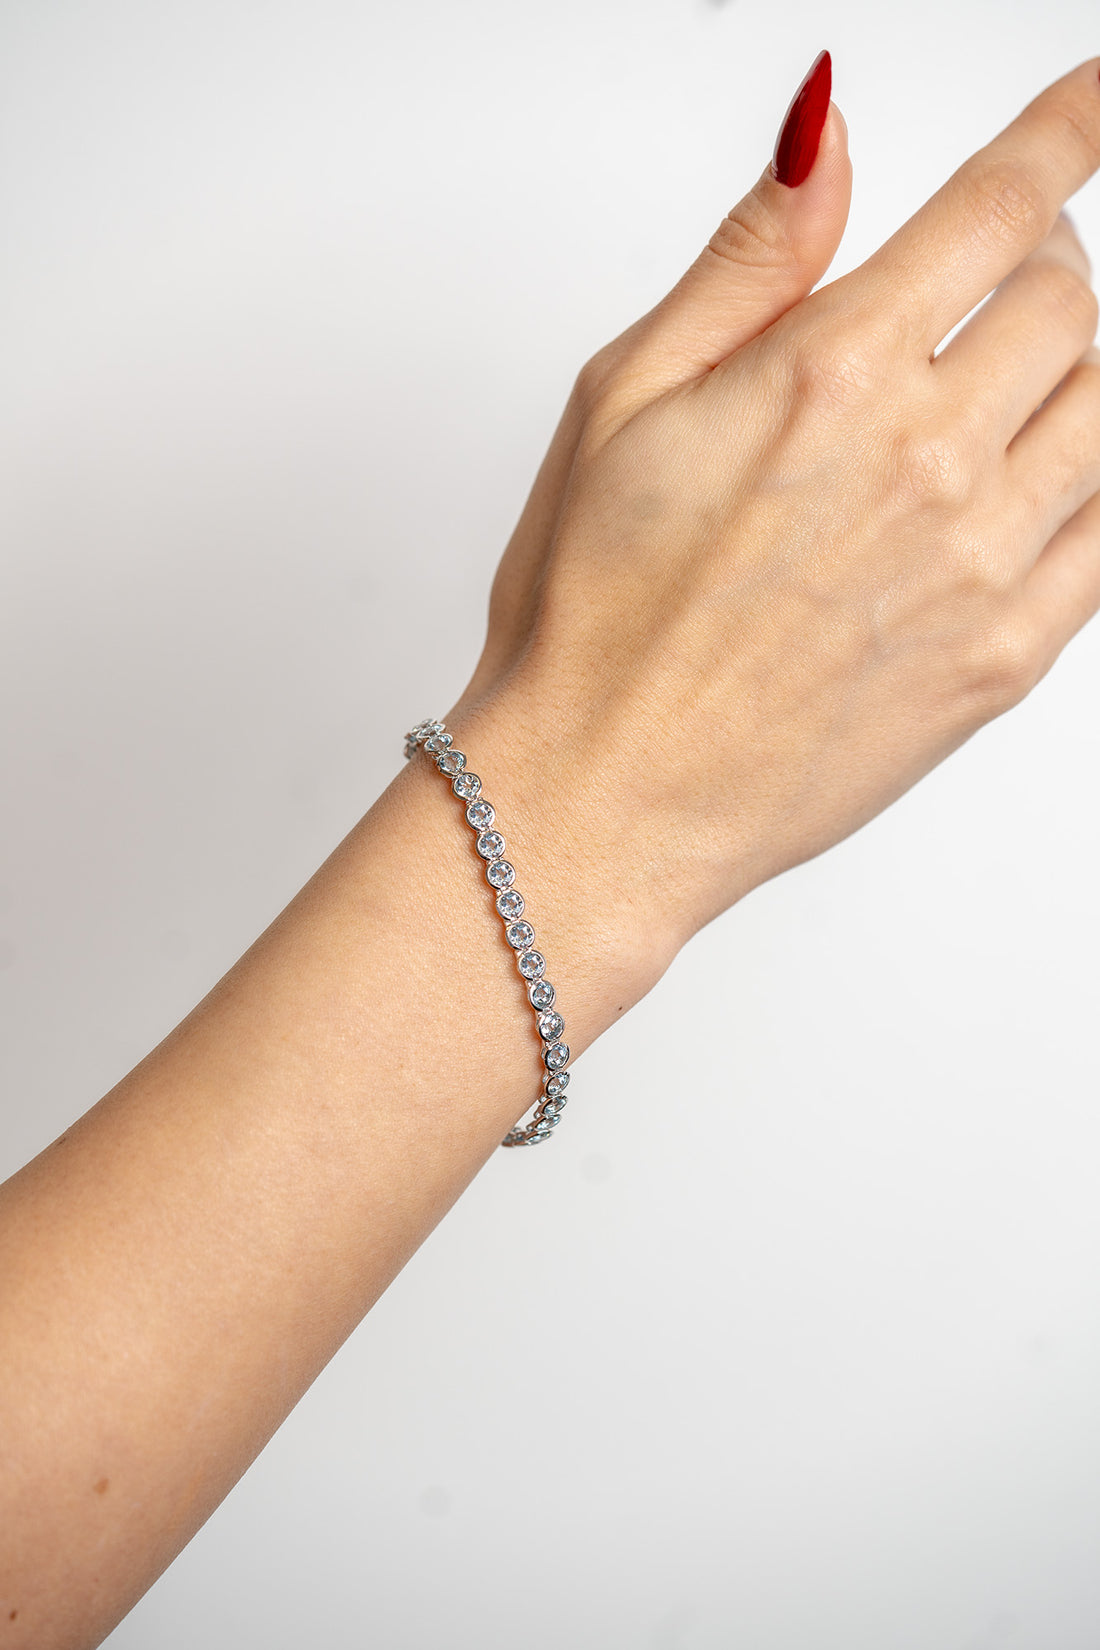 Aquamarine Bezel-Set Bracelet - Skeie's Jewelers